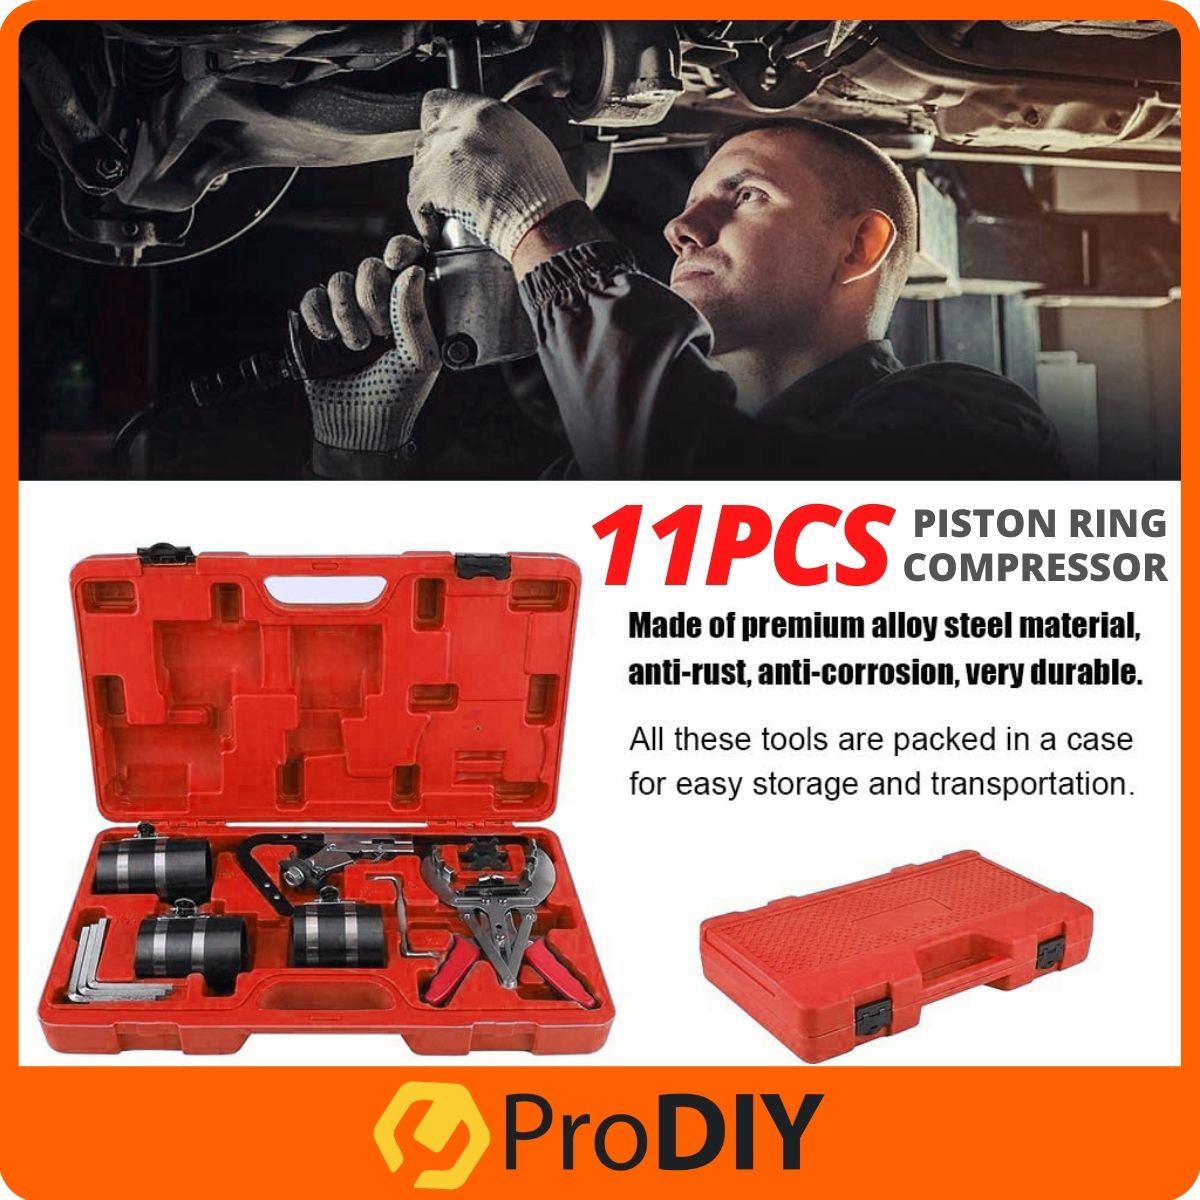 11PCS Piston Ring Compressor Tool Kit Service Tool Set Engine Ratchet Cleaning Expander Compressor Auto Repair Tools